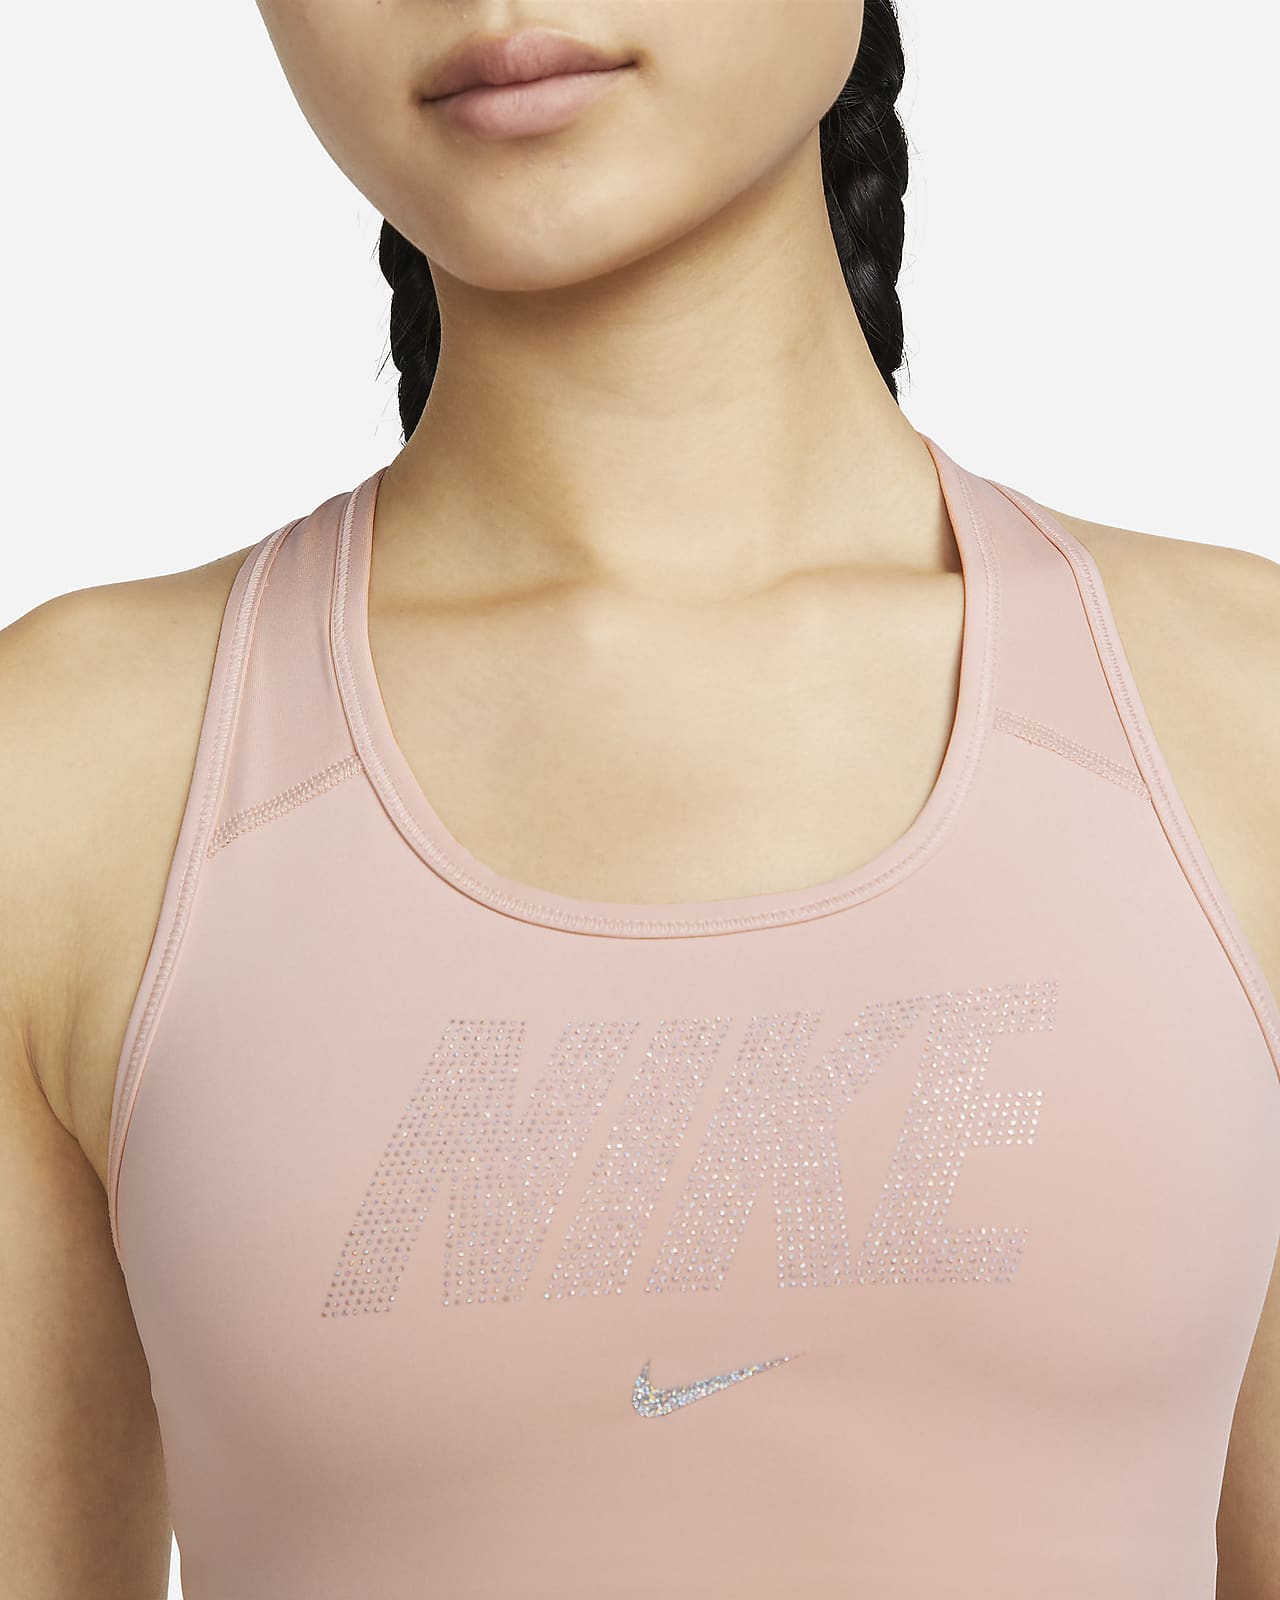 Nike Womens Medium Support Swoosh Futura Bra - Pink